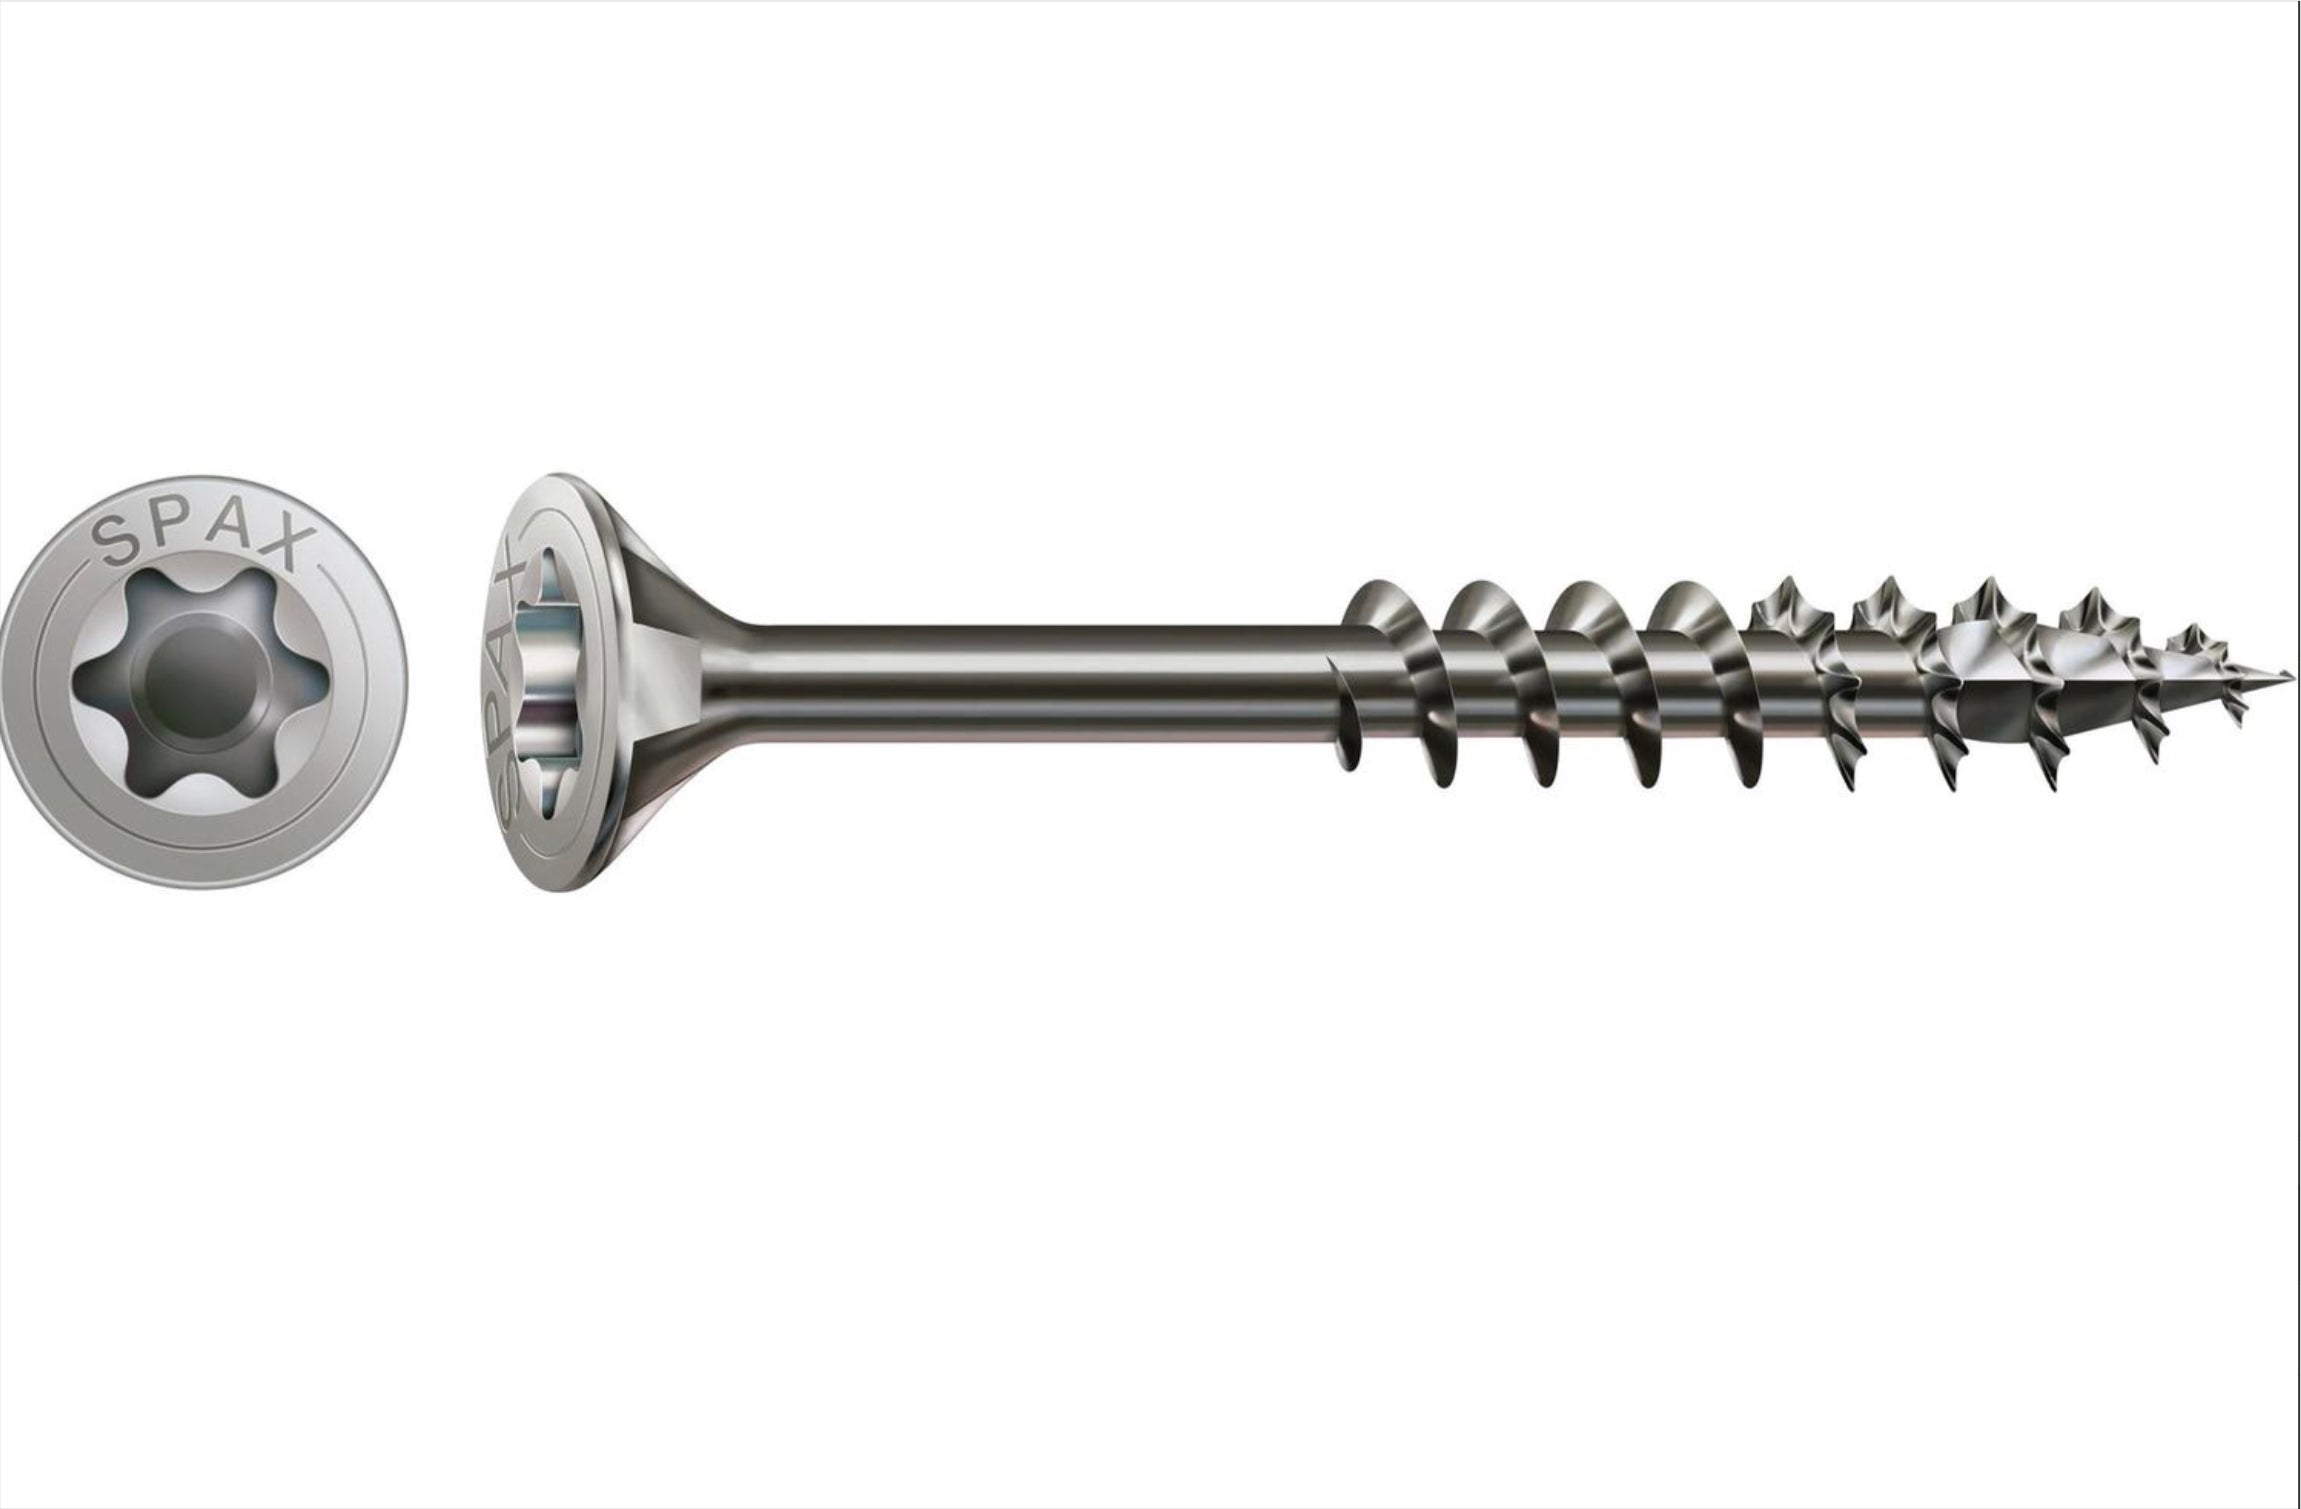 Spax Outdoor Universal Screws Diameter: 6Mm, Length: 60Mm Stainless Steel